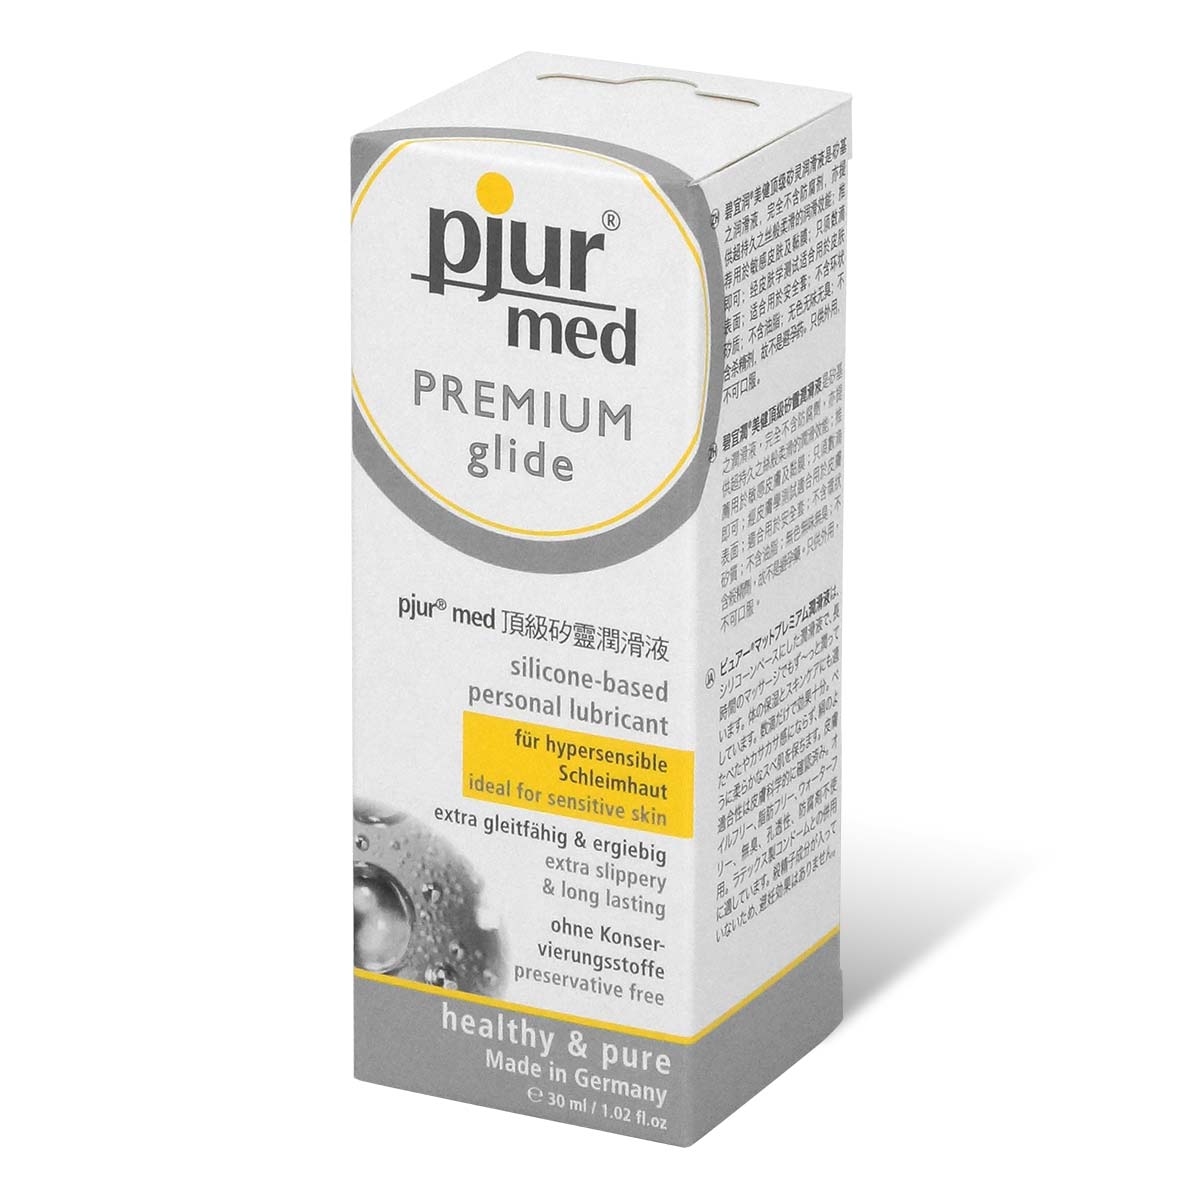 pjur med PREMIUM glide 30ml Silicone-based Lubricant (Short Expiry)-p_1